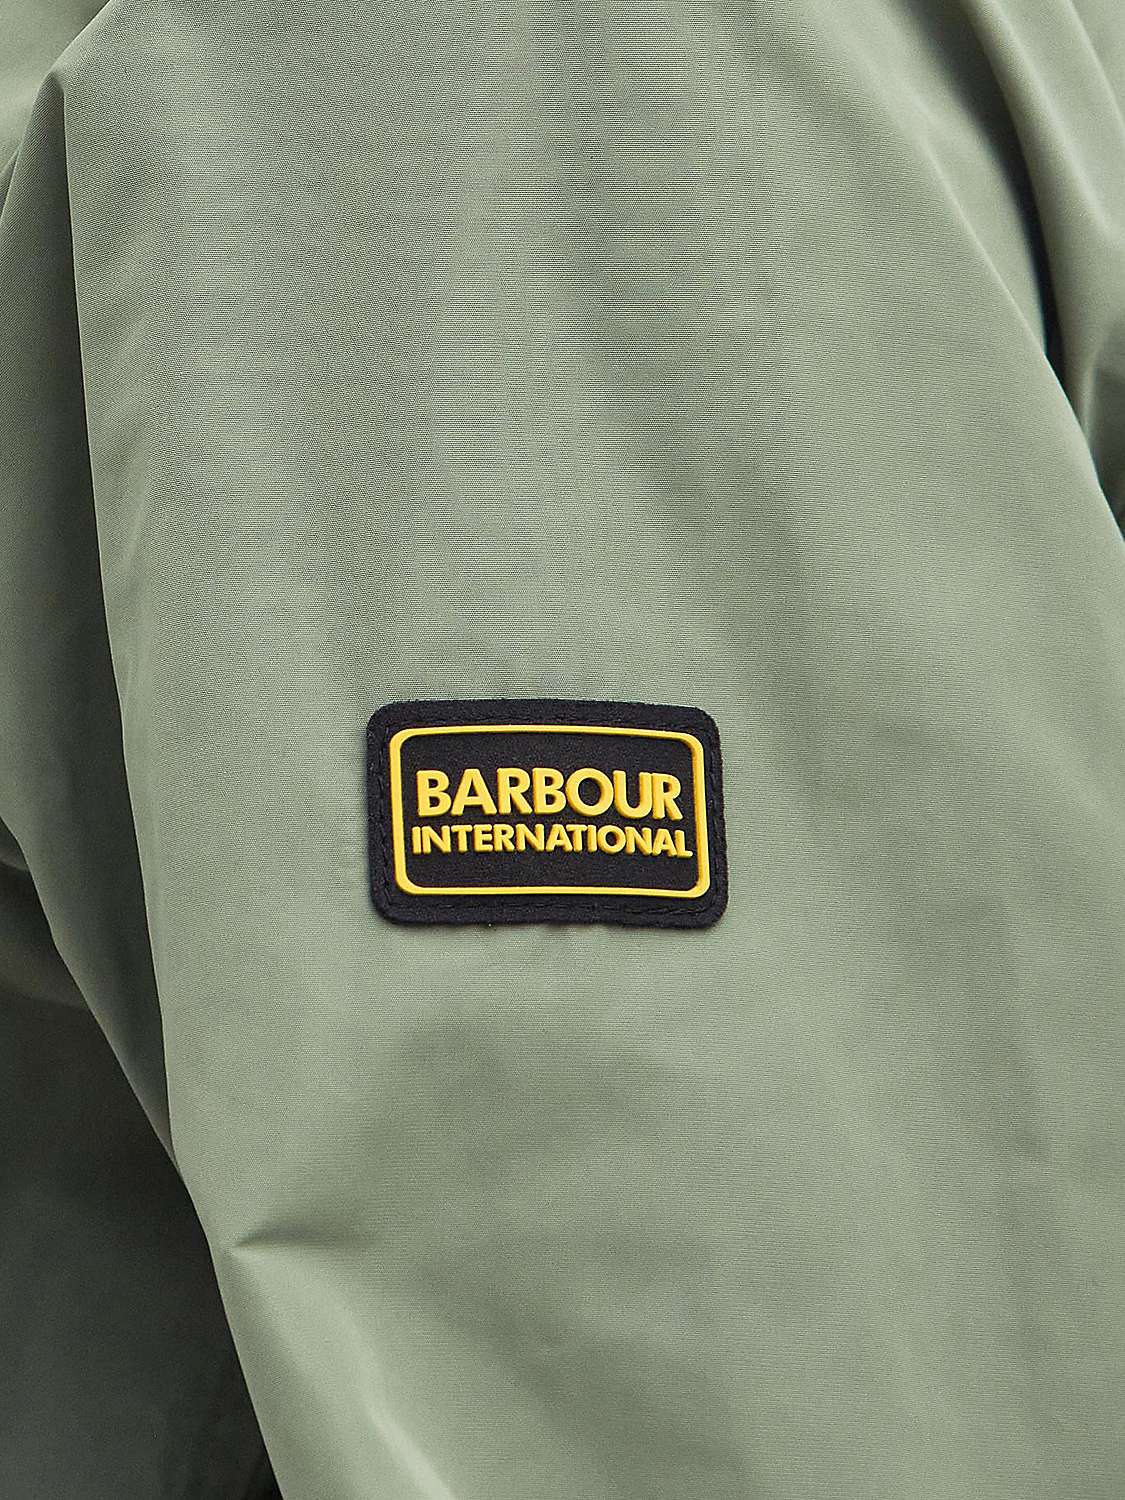 Buy Barbour International Walker Showerproof Jacket Online at johnlewis.com